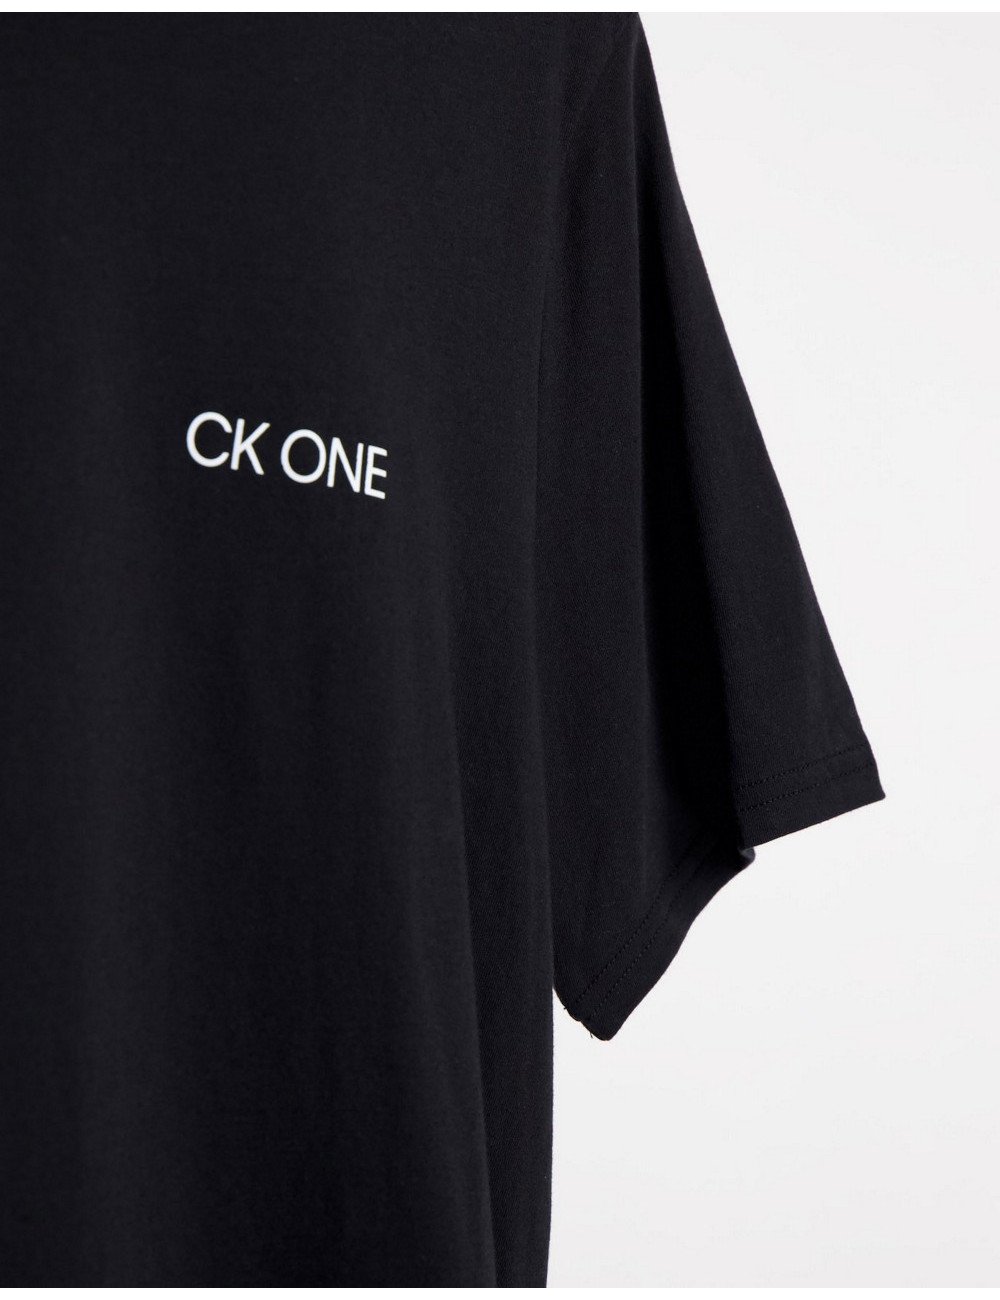 CK One crew t-shirt in black